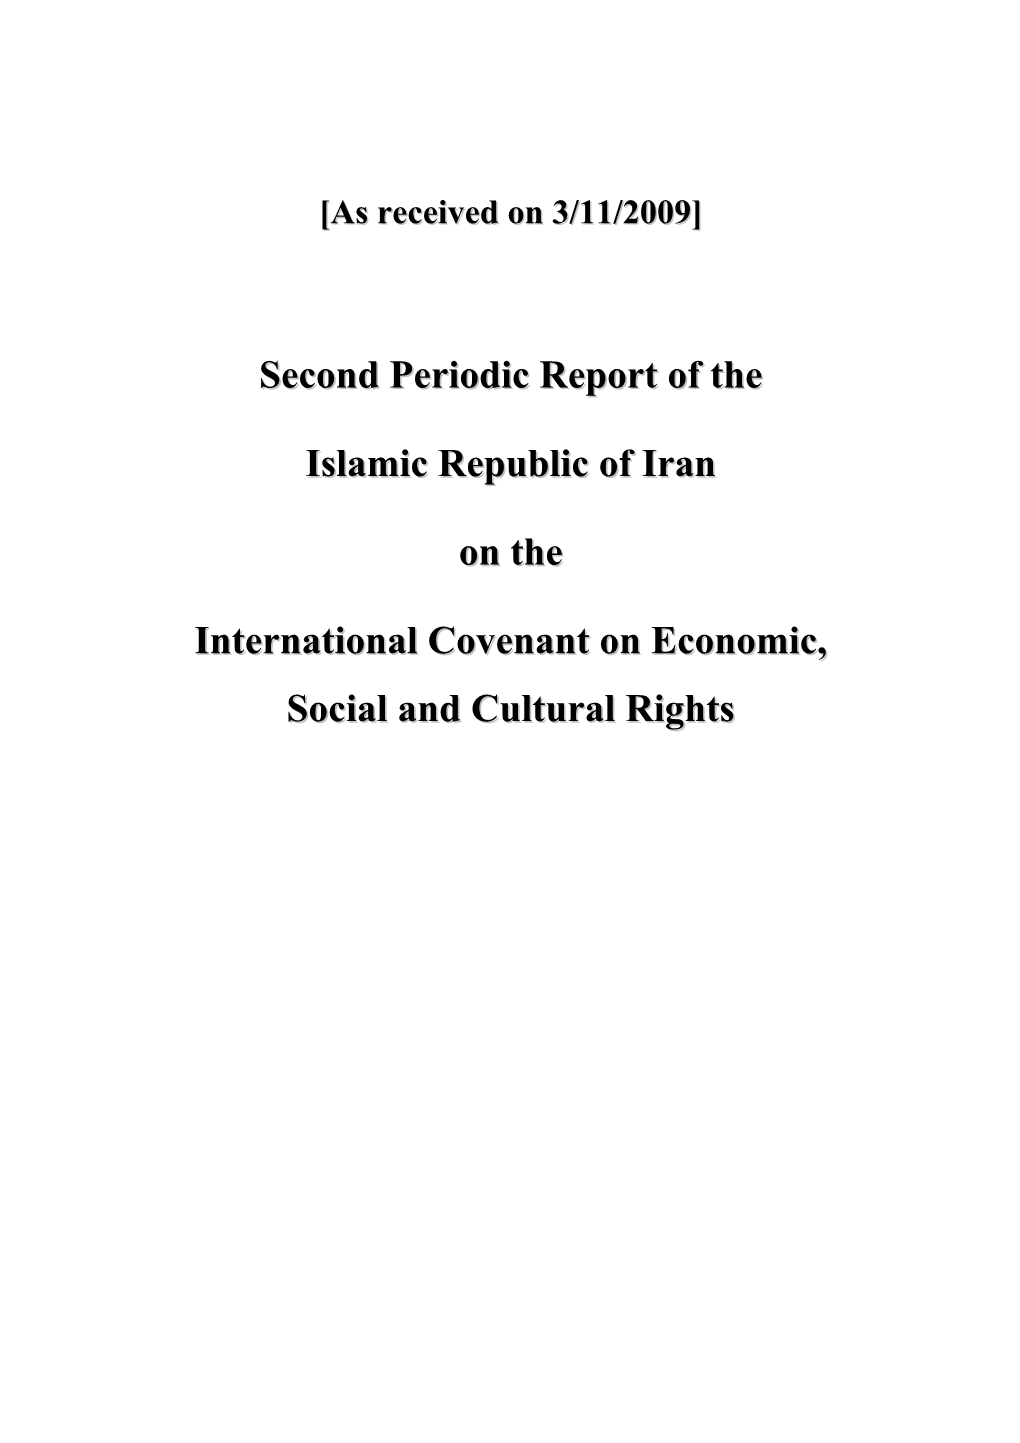 Periodic Report of the Islamic Republic of Iran on the International